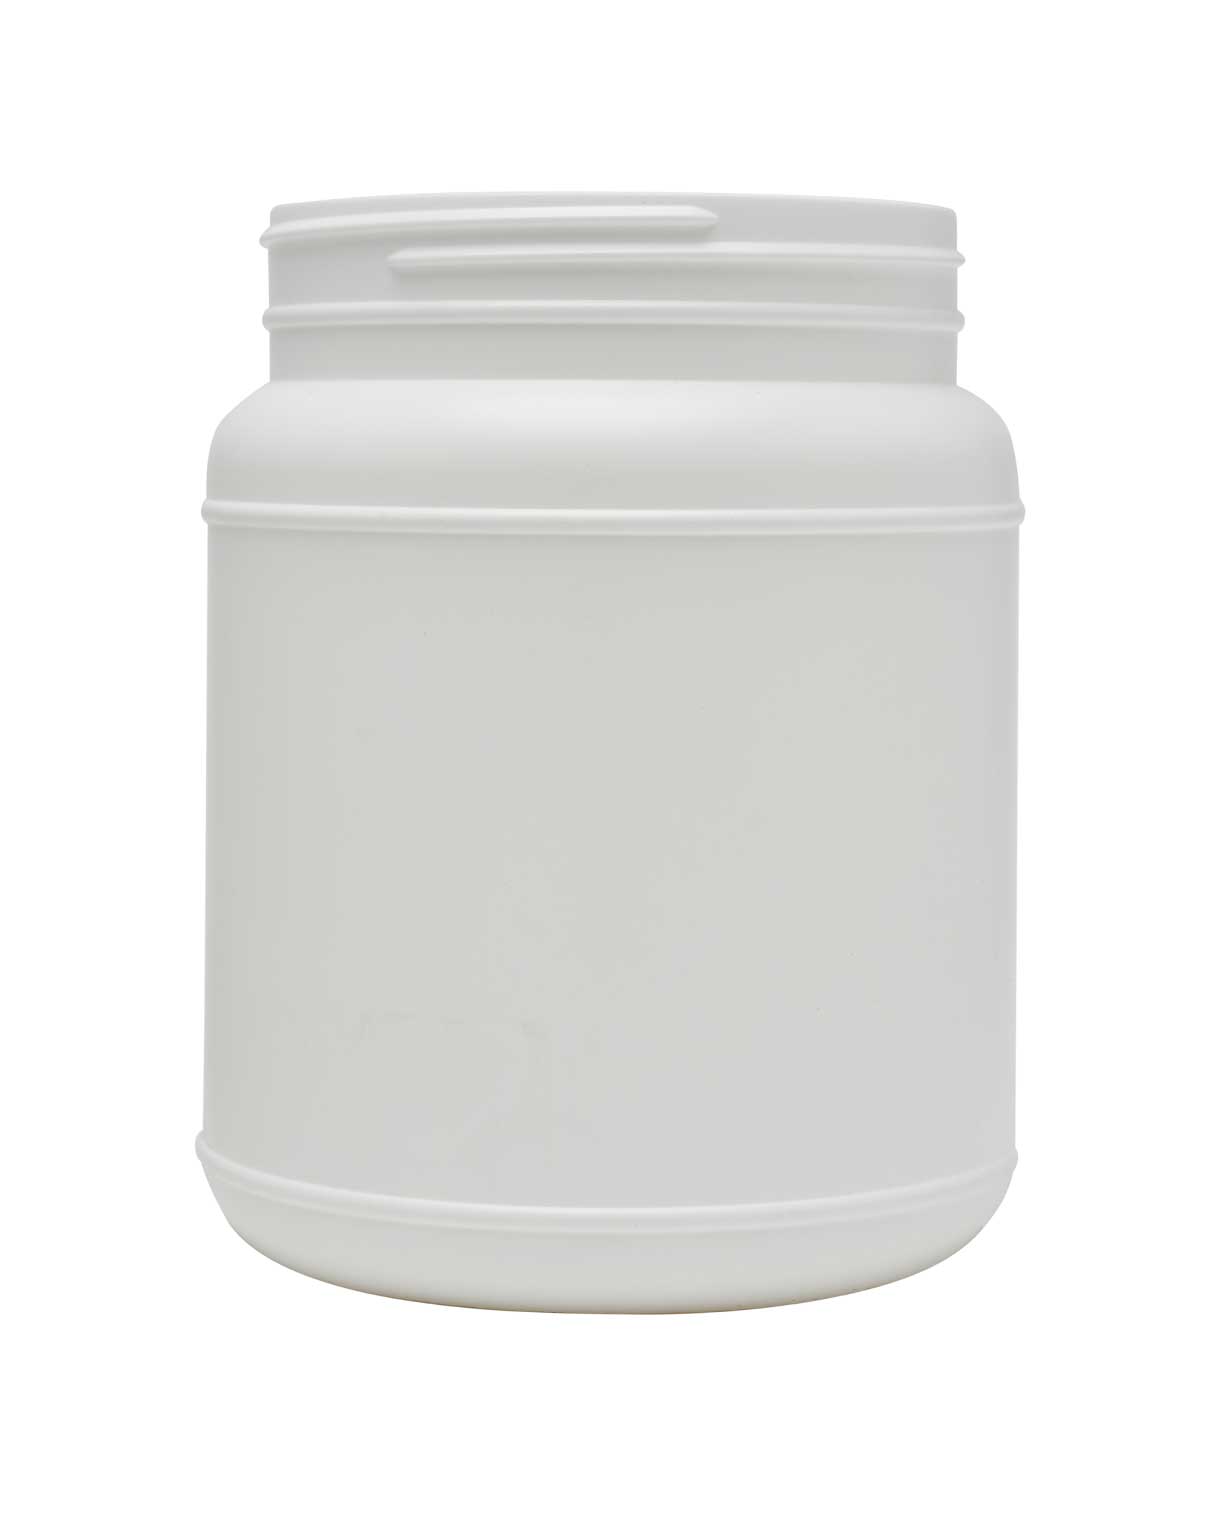 Hdpe Protein Jar Empty Plastic Protein Powder Container Plastic